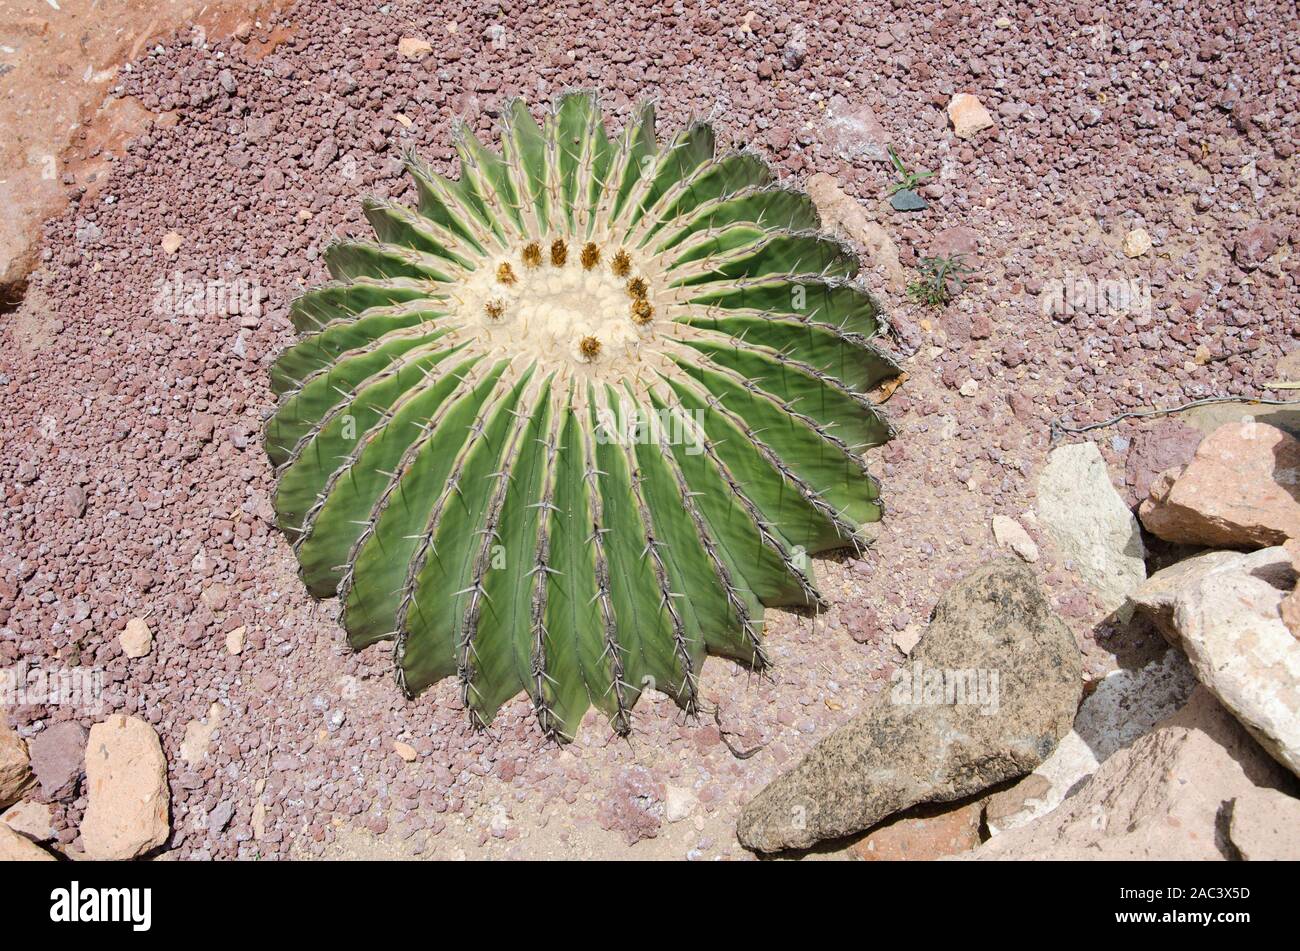 Golden barrel cactus, Echinocactus grusonii semi buried in the sand, Hidalgo, Mexico Stock Photo